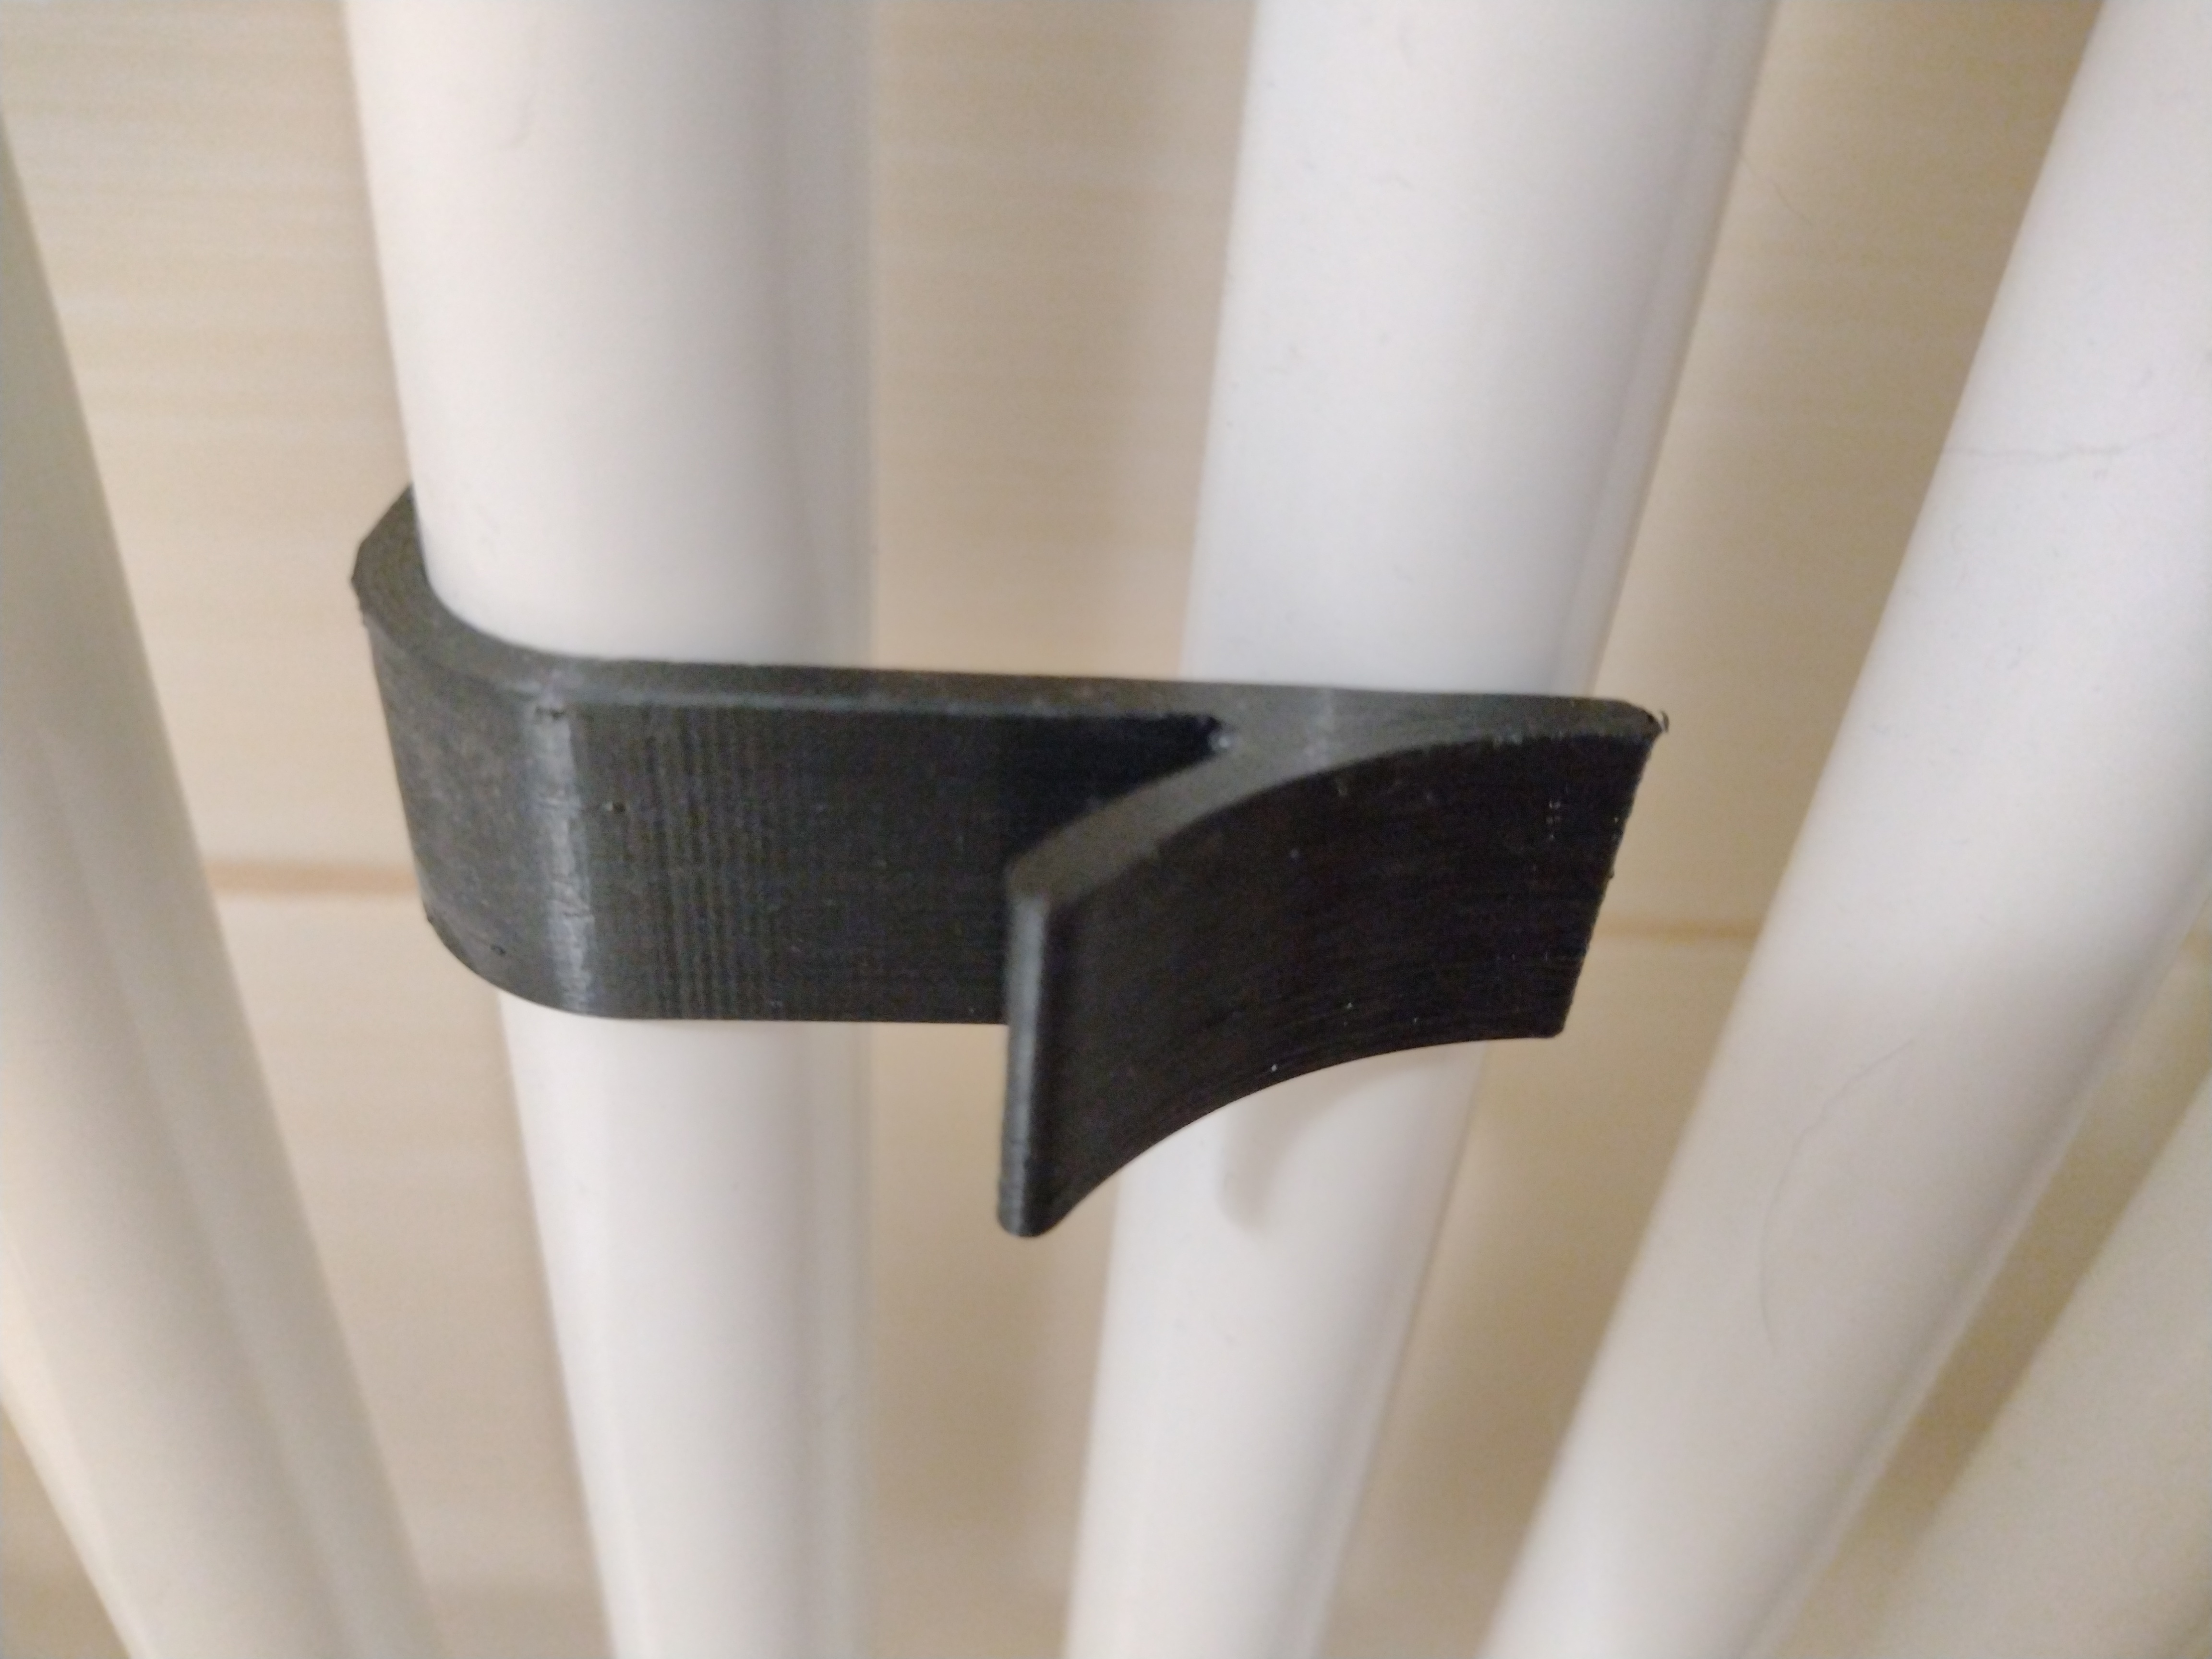 Bathroom radiator hook for 22.5 mm diam